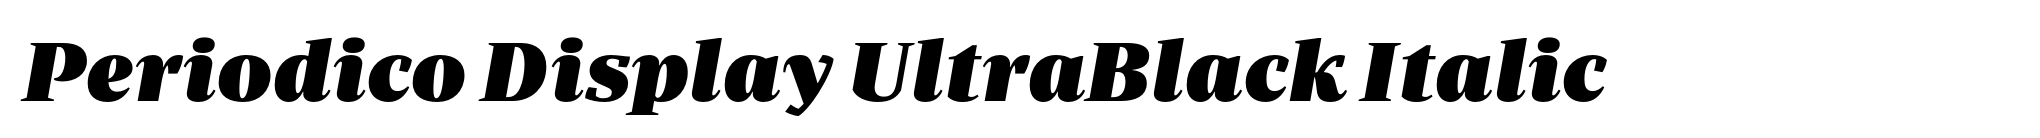 Periodico Display UltraBlack Italic image